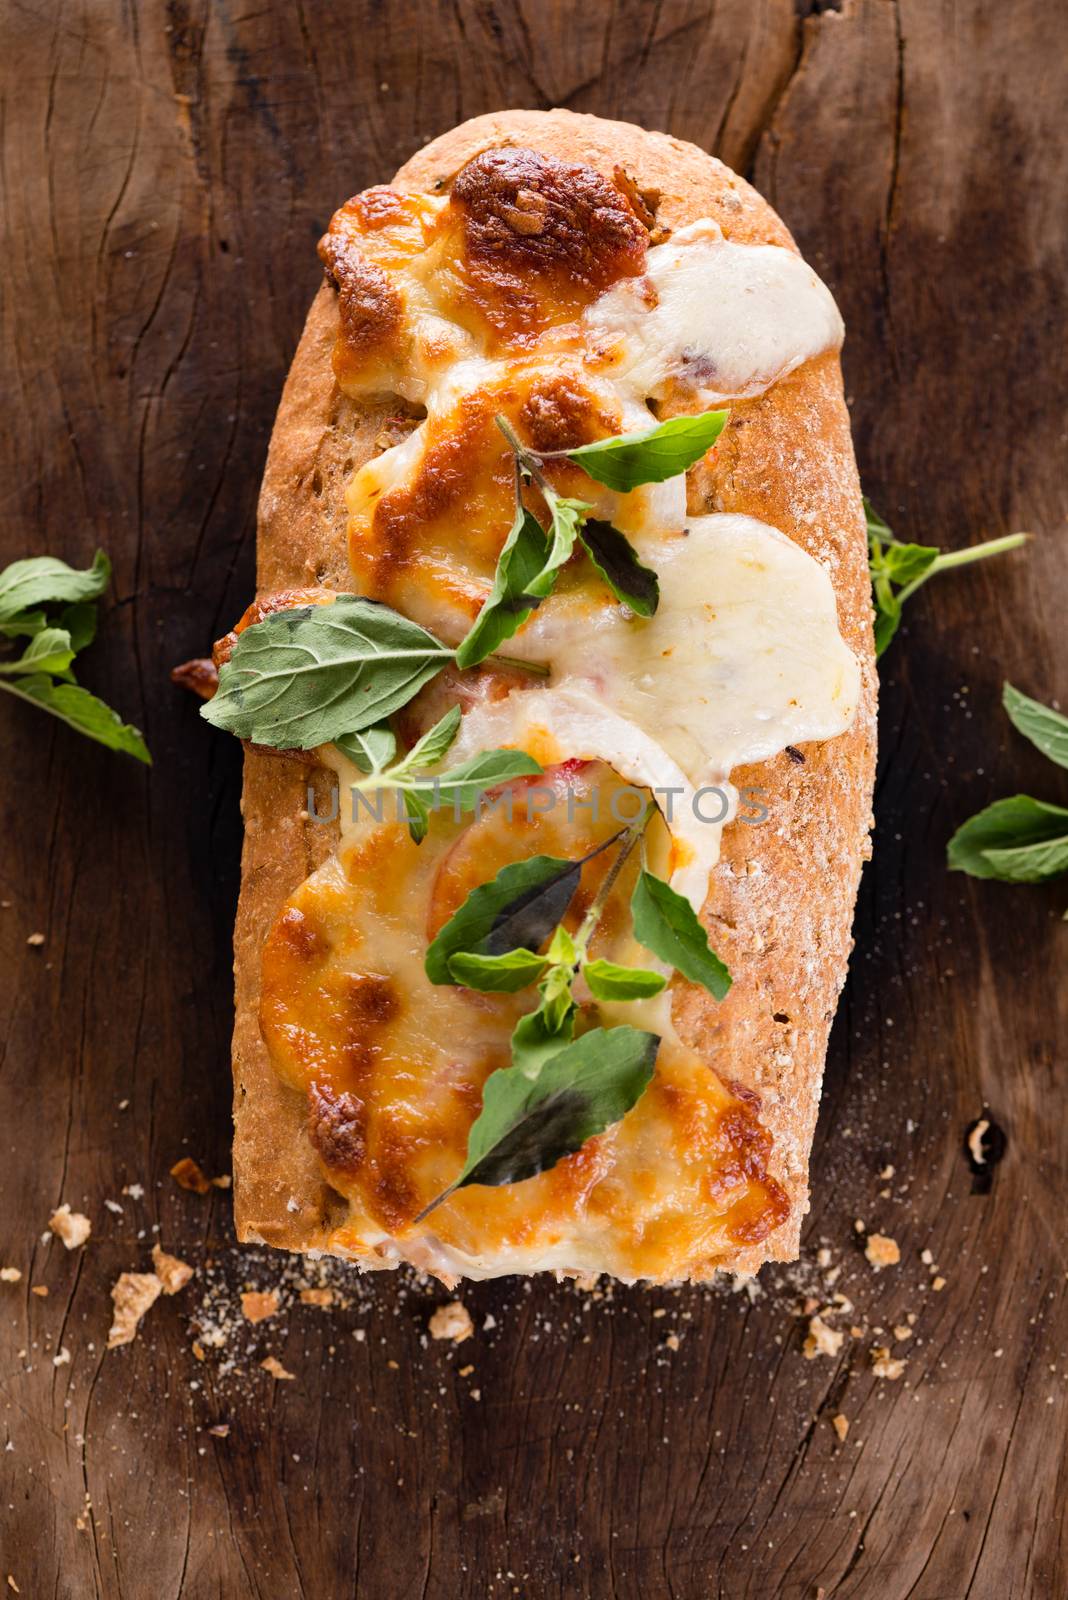 pizza baguette with mozzarella by p.studio66